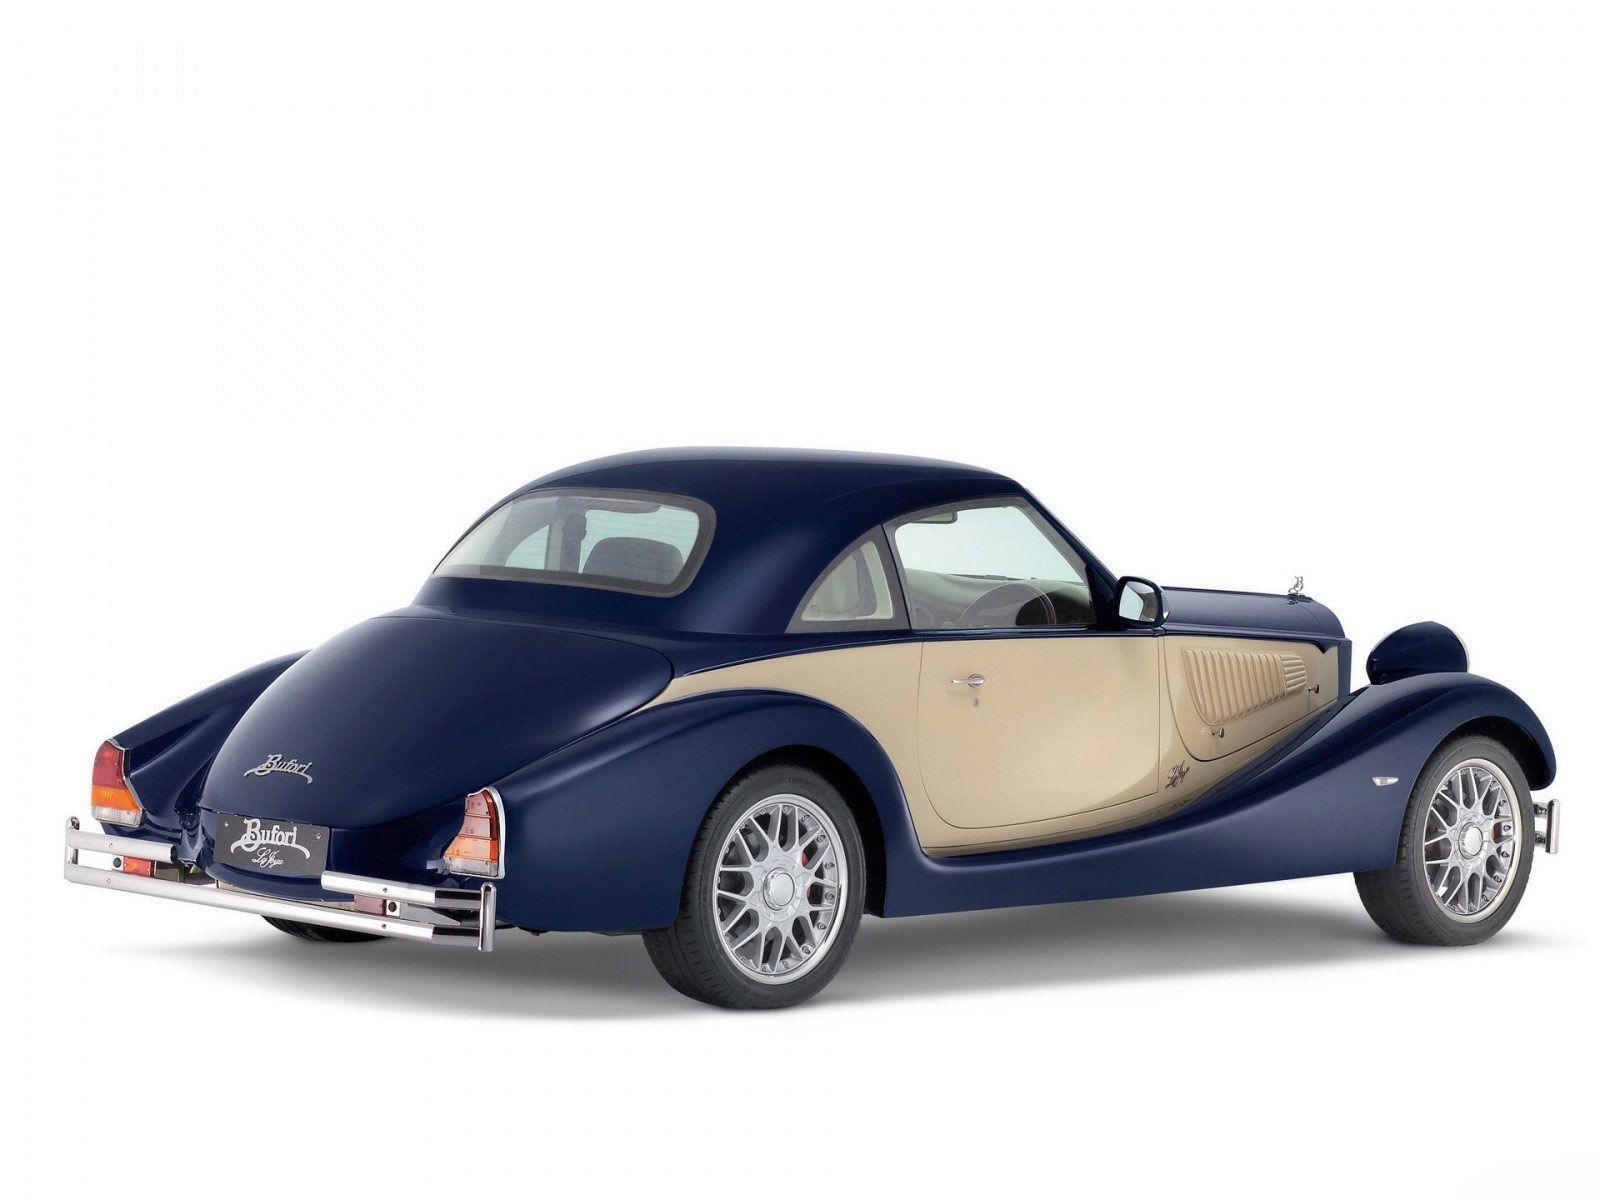 Desktop Wallpaper · Motors · Cars · Bufori classic cars